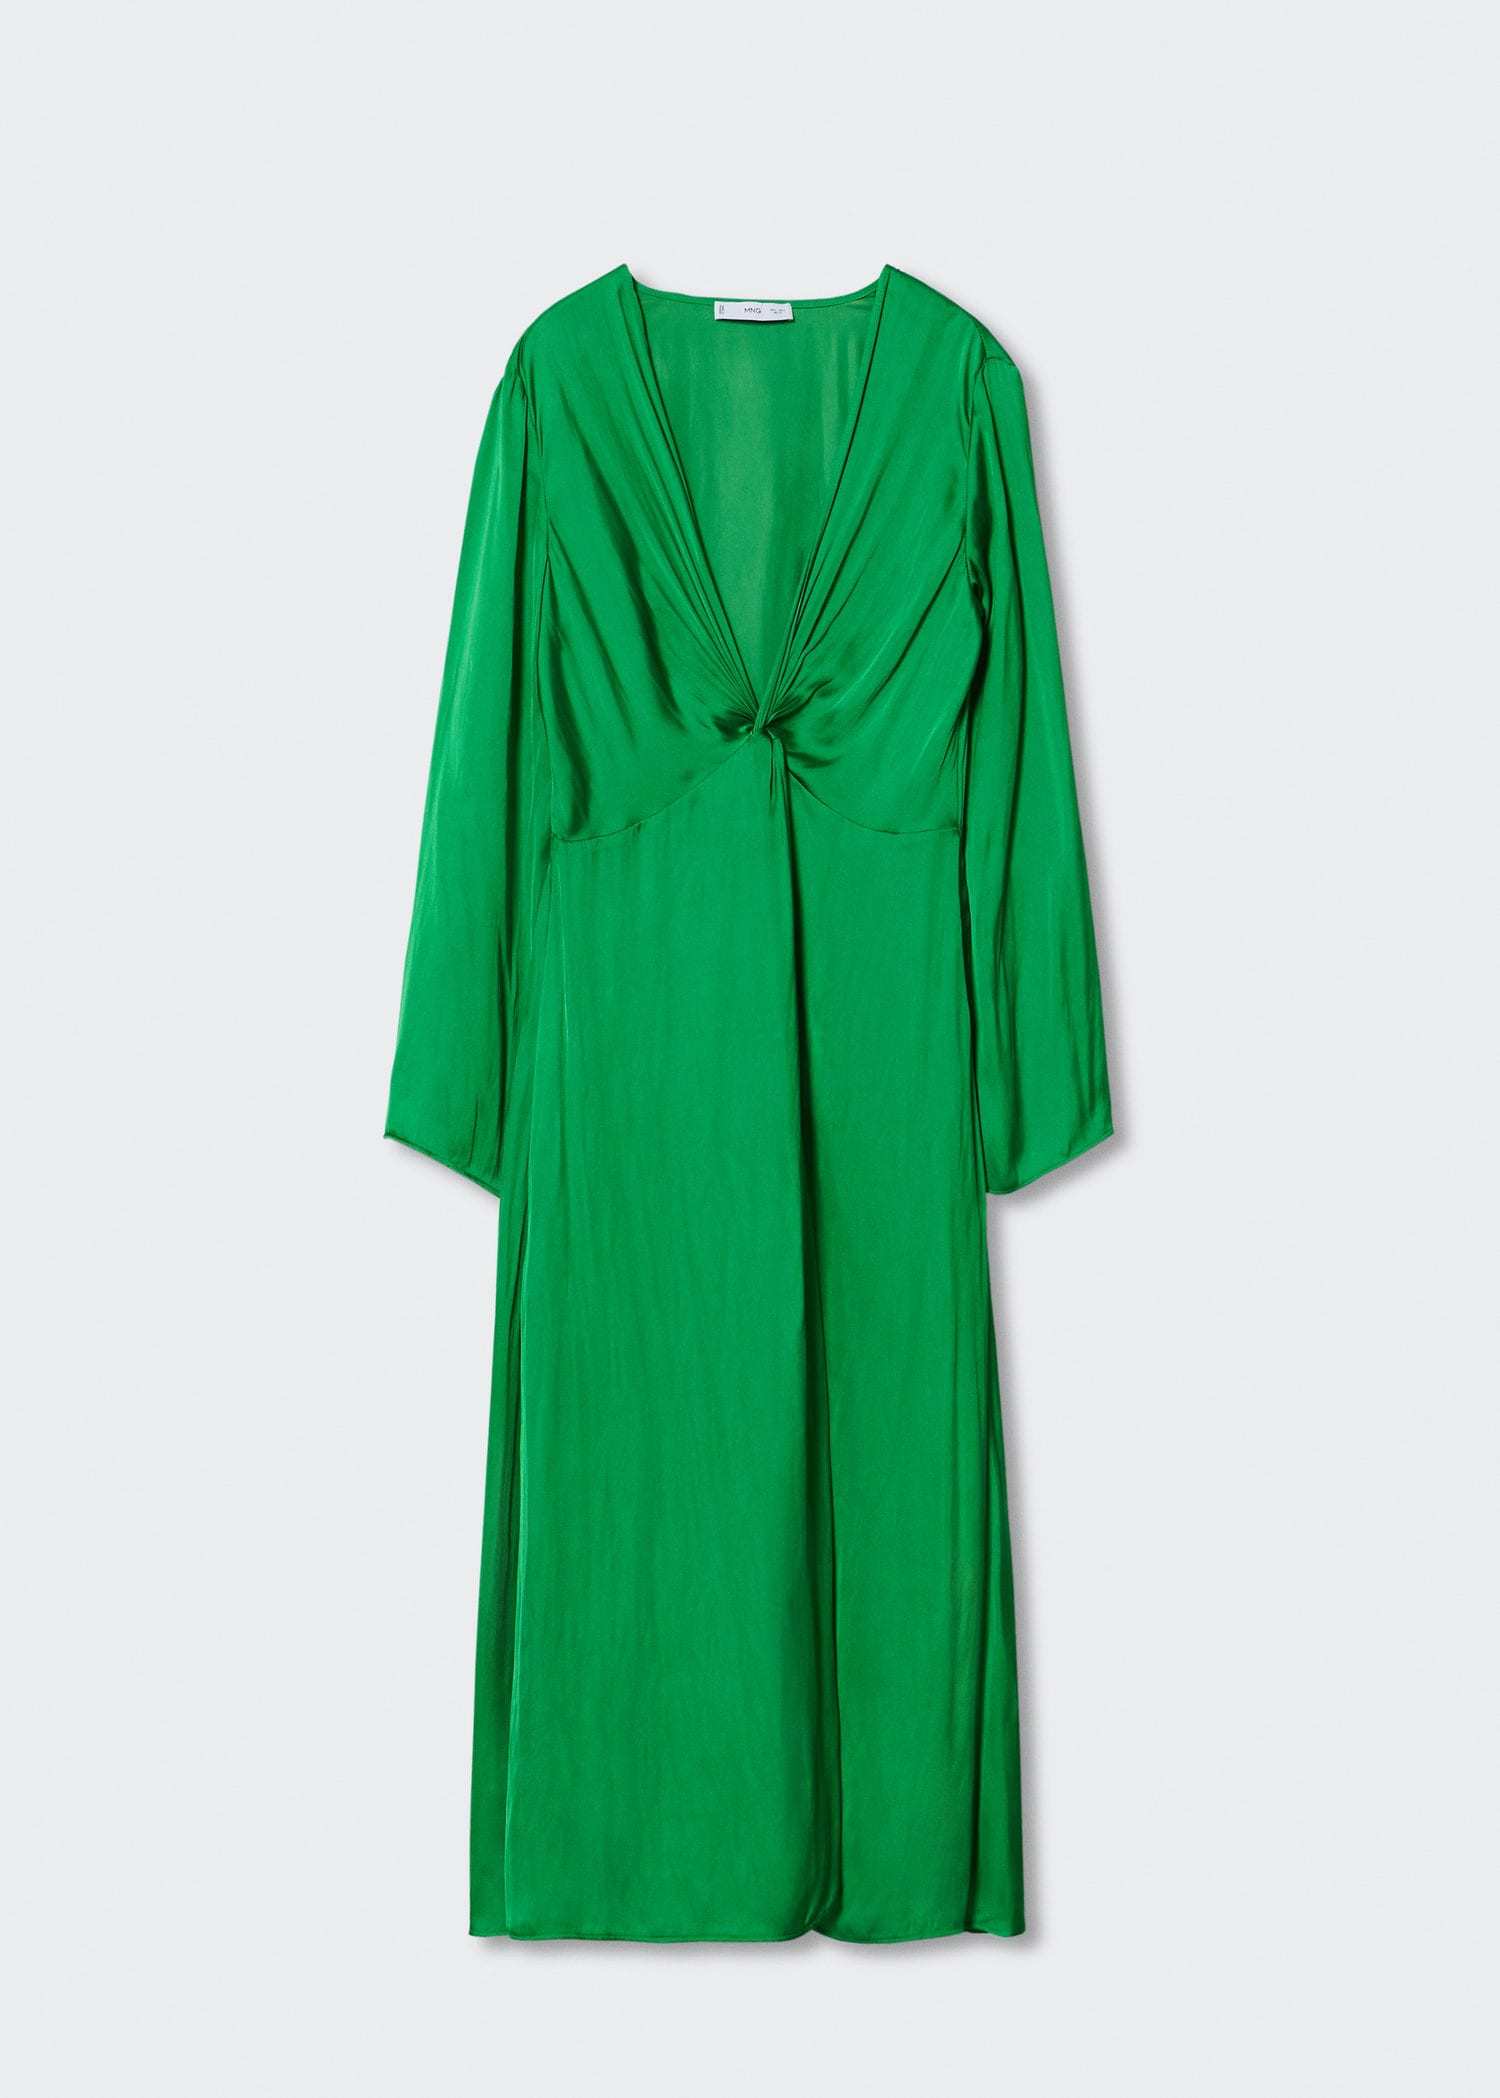 Vestido verde satinado de Mango (29,99 euros).